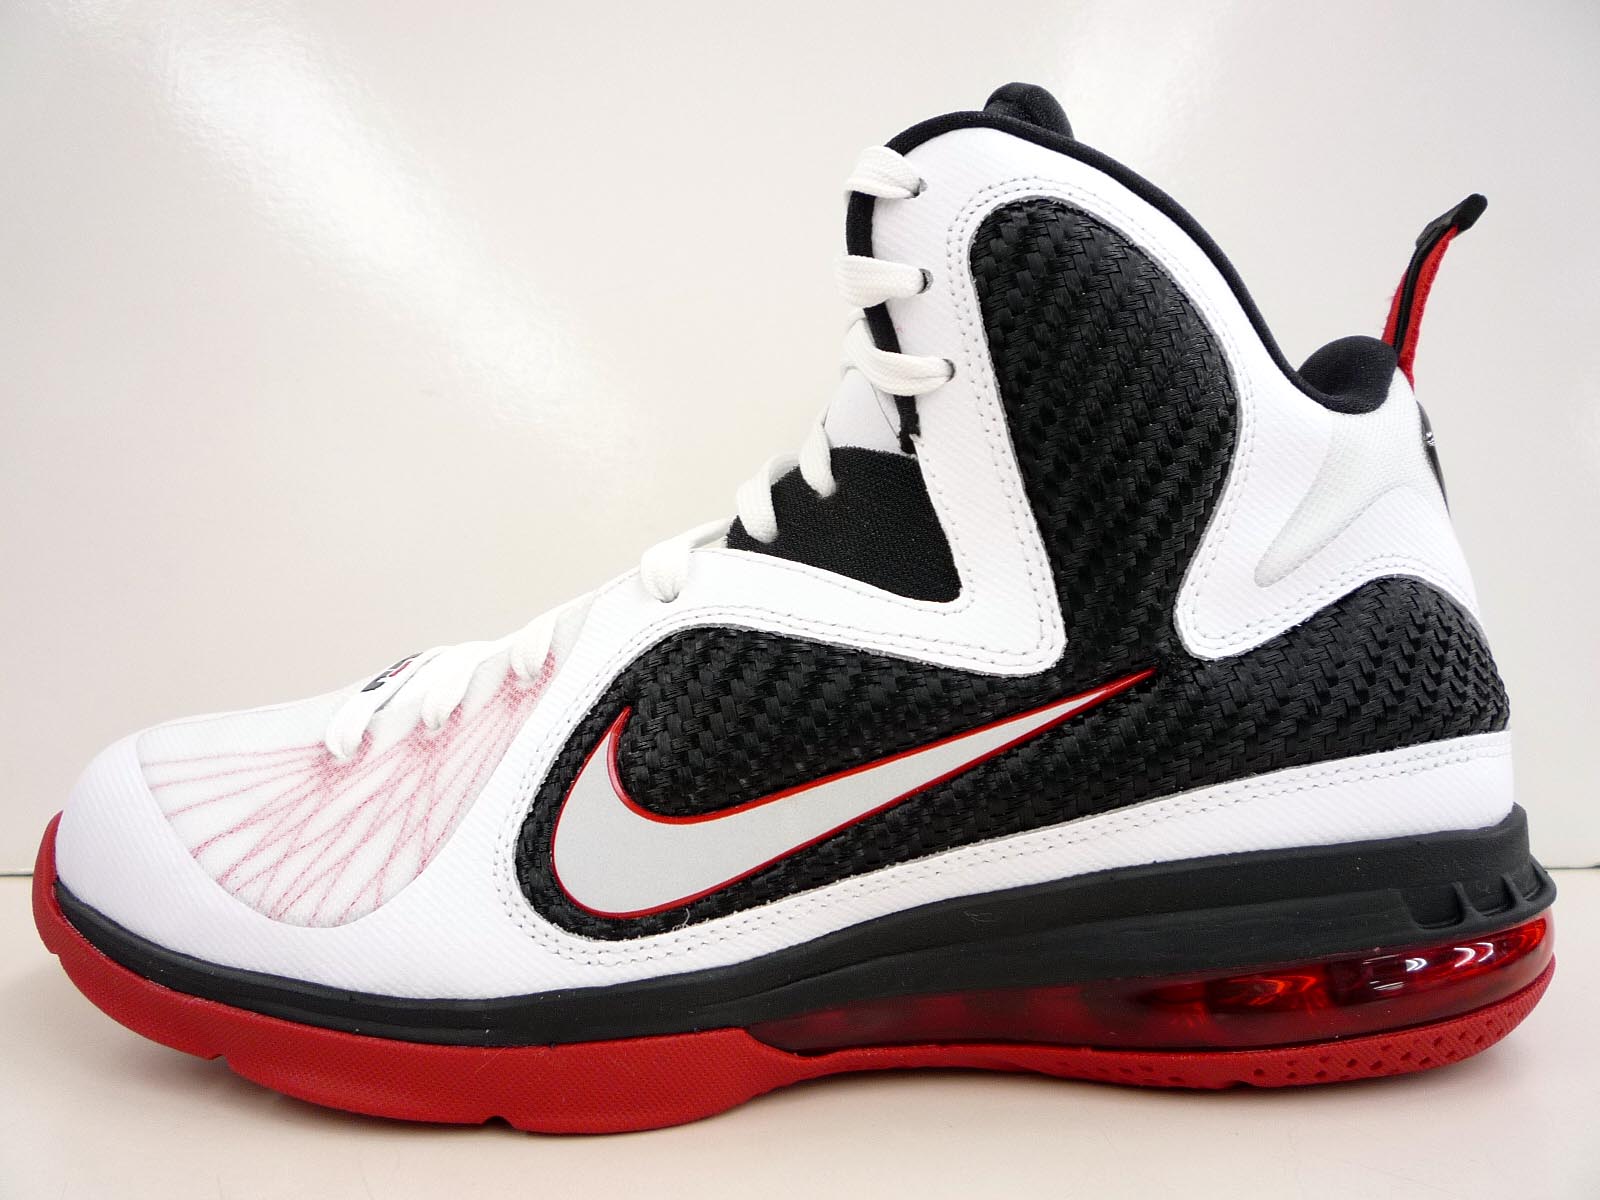 Nike LeBron 9 – White/Black/Sport Red – New Images